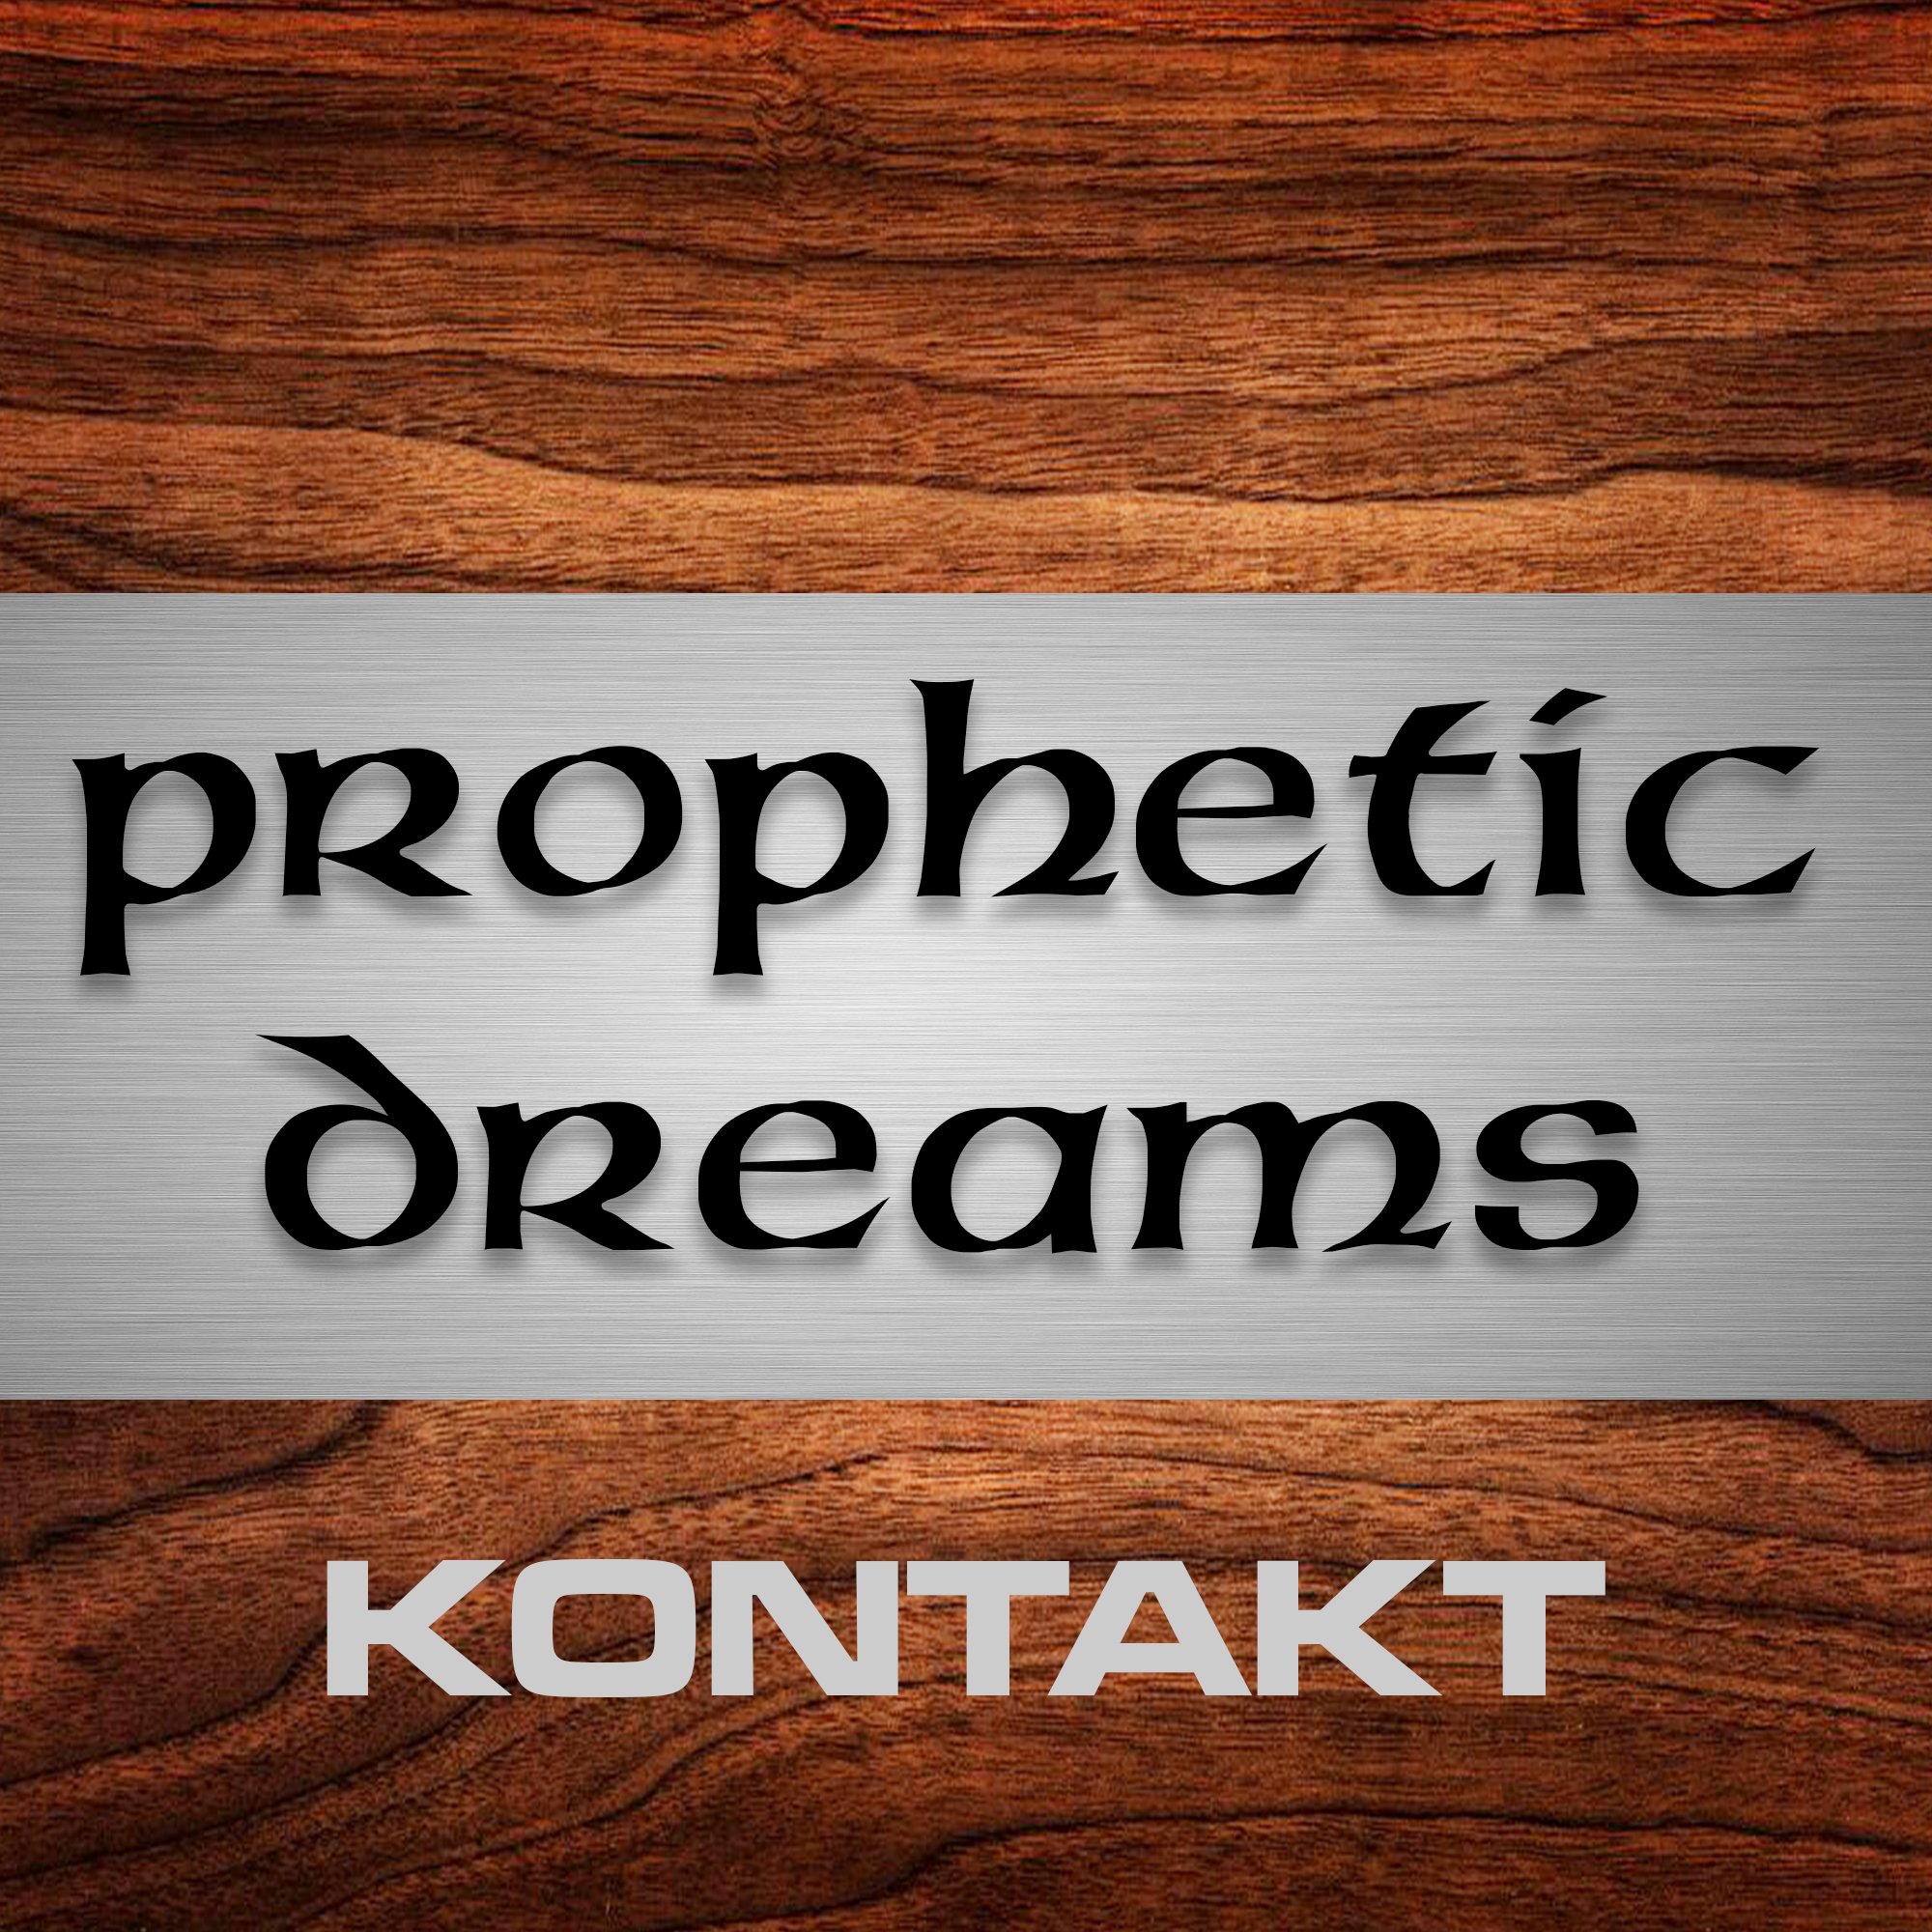 Prophetic Dreams Kontakt Logo.jpg